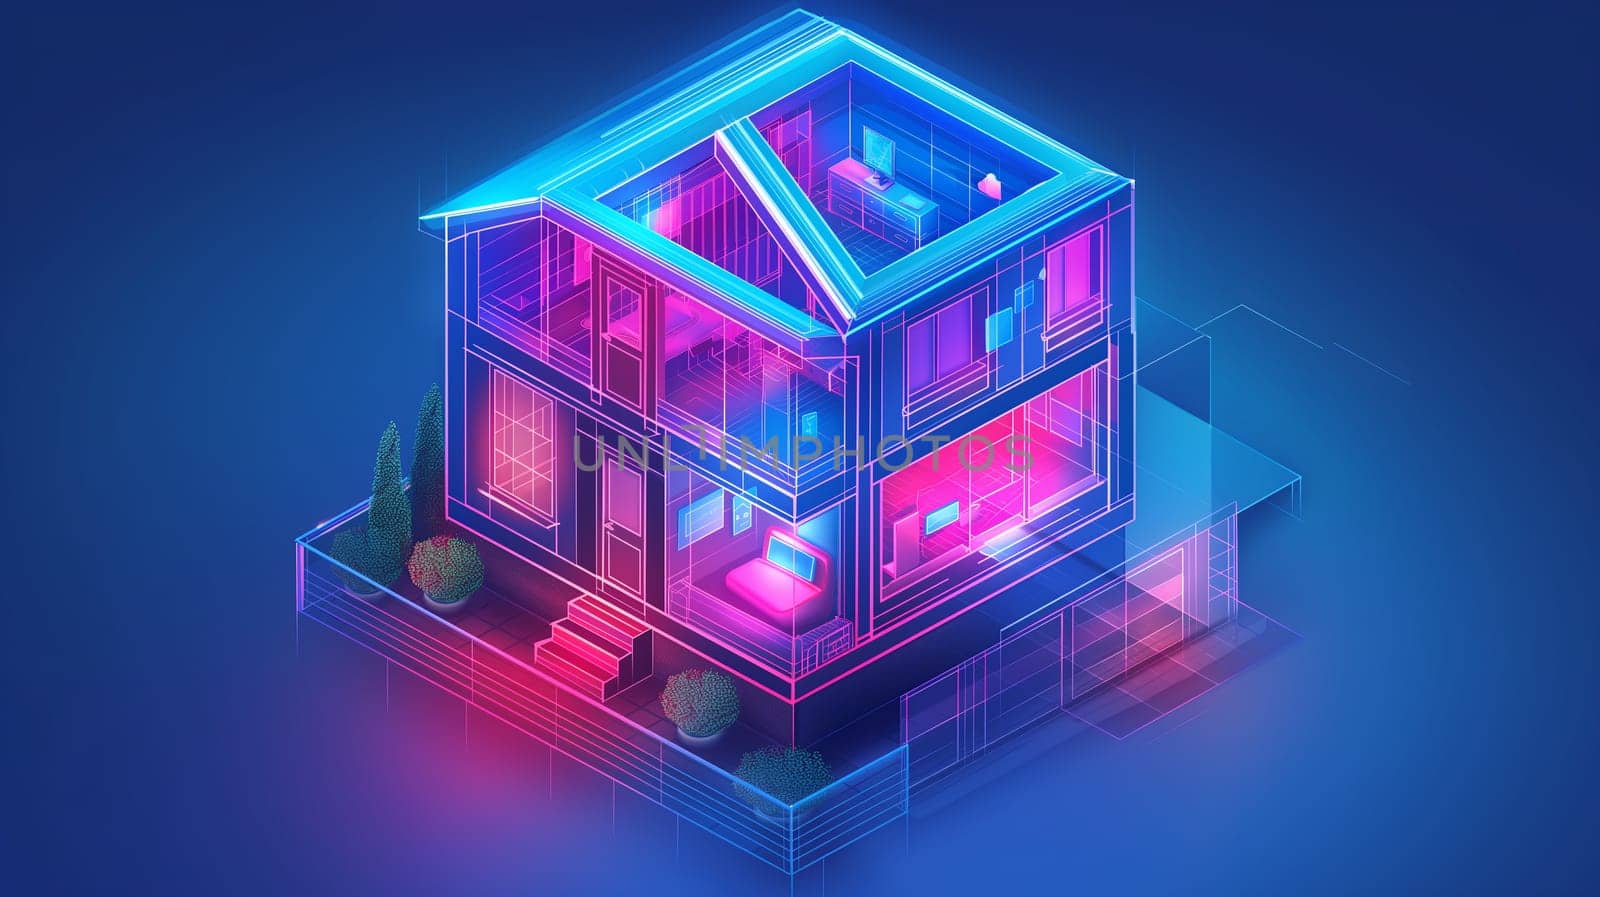 Futuristic Neon-Lit Smart Home at Night by chrisroll